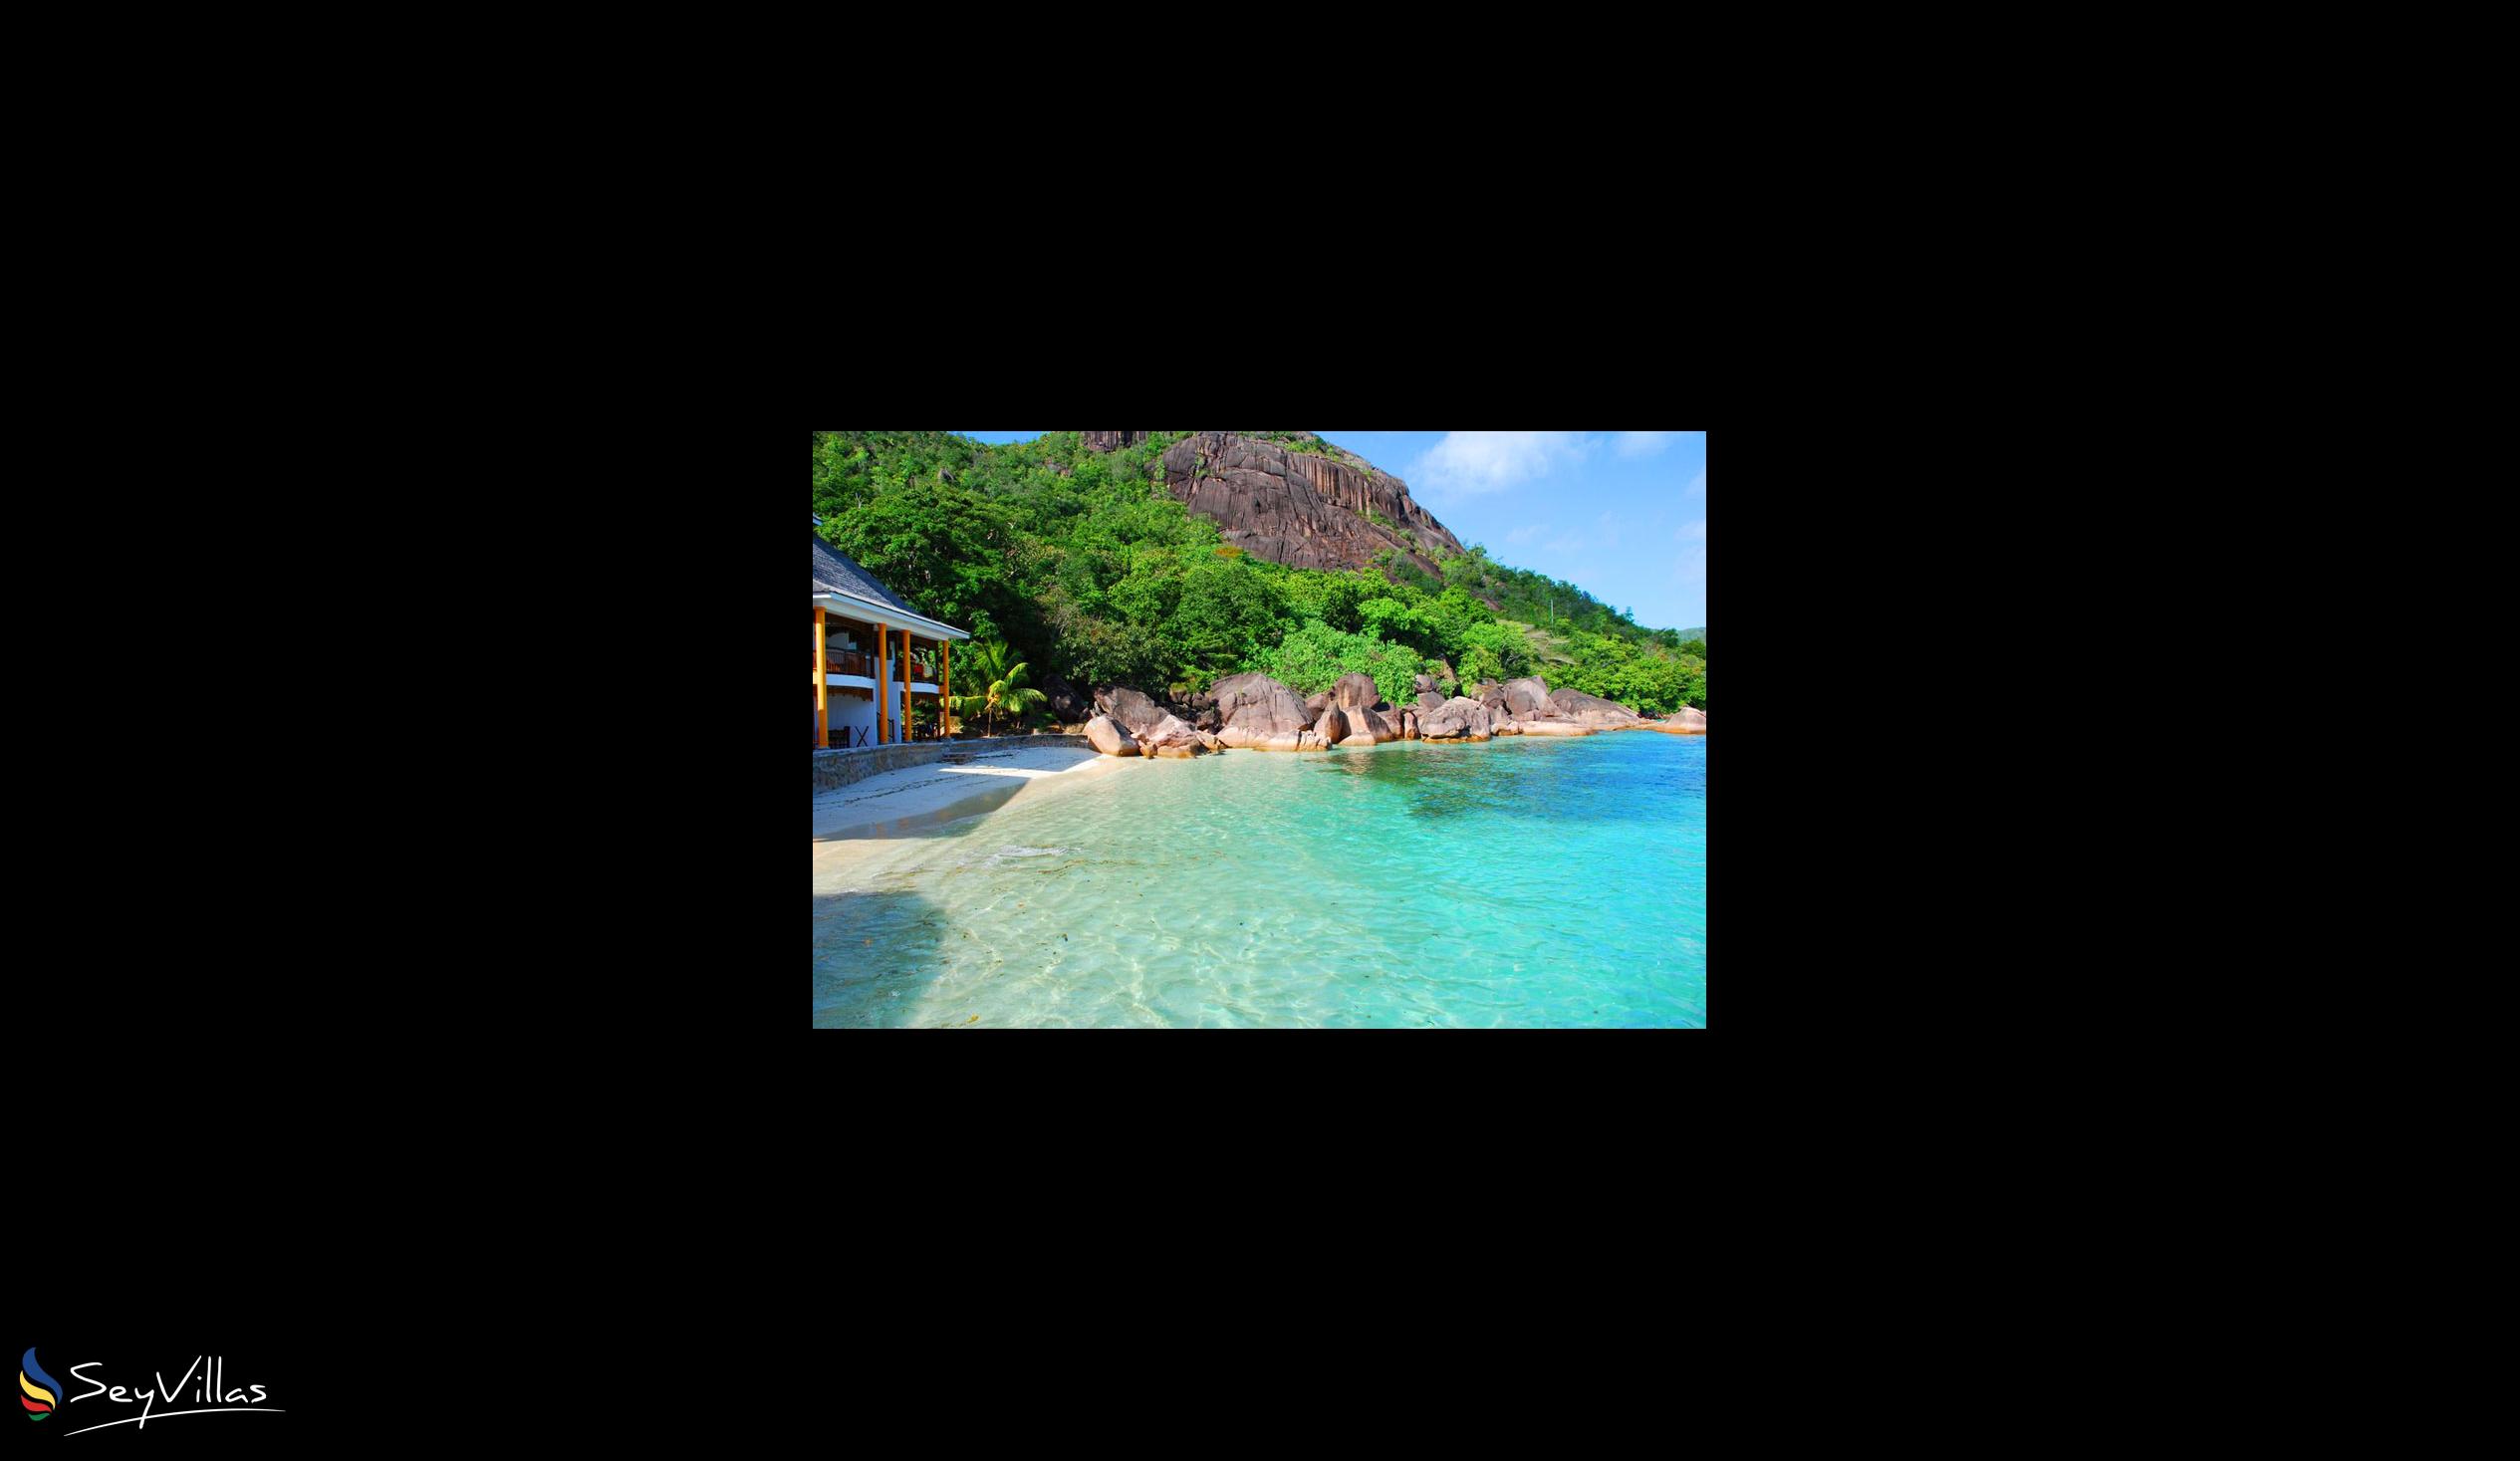 Photo 8: Le Domaine de La Reserve - Outdoor area - Praslin (Seychelles)